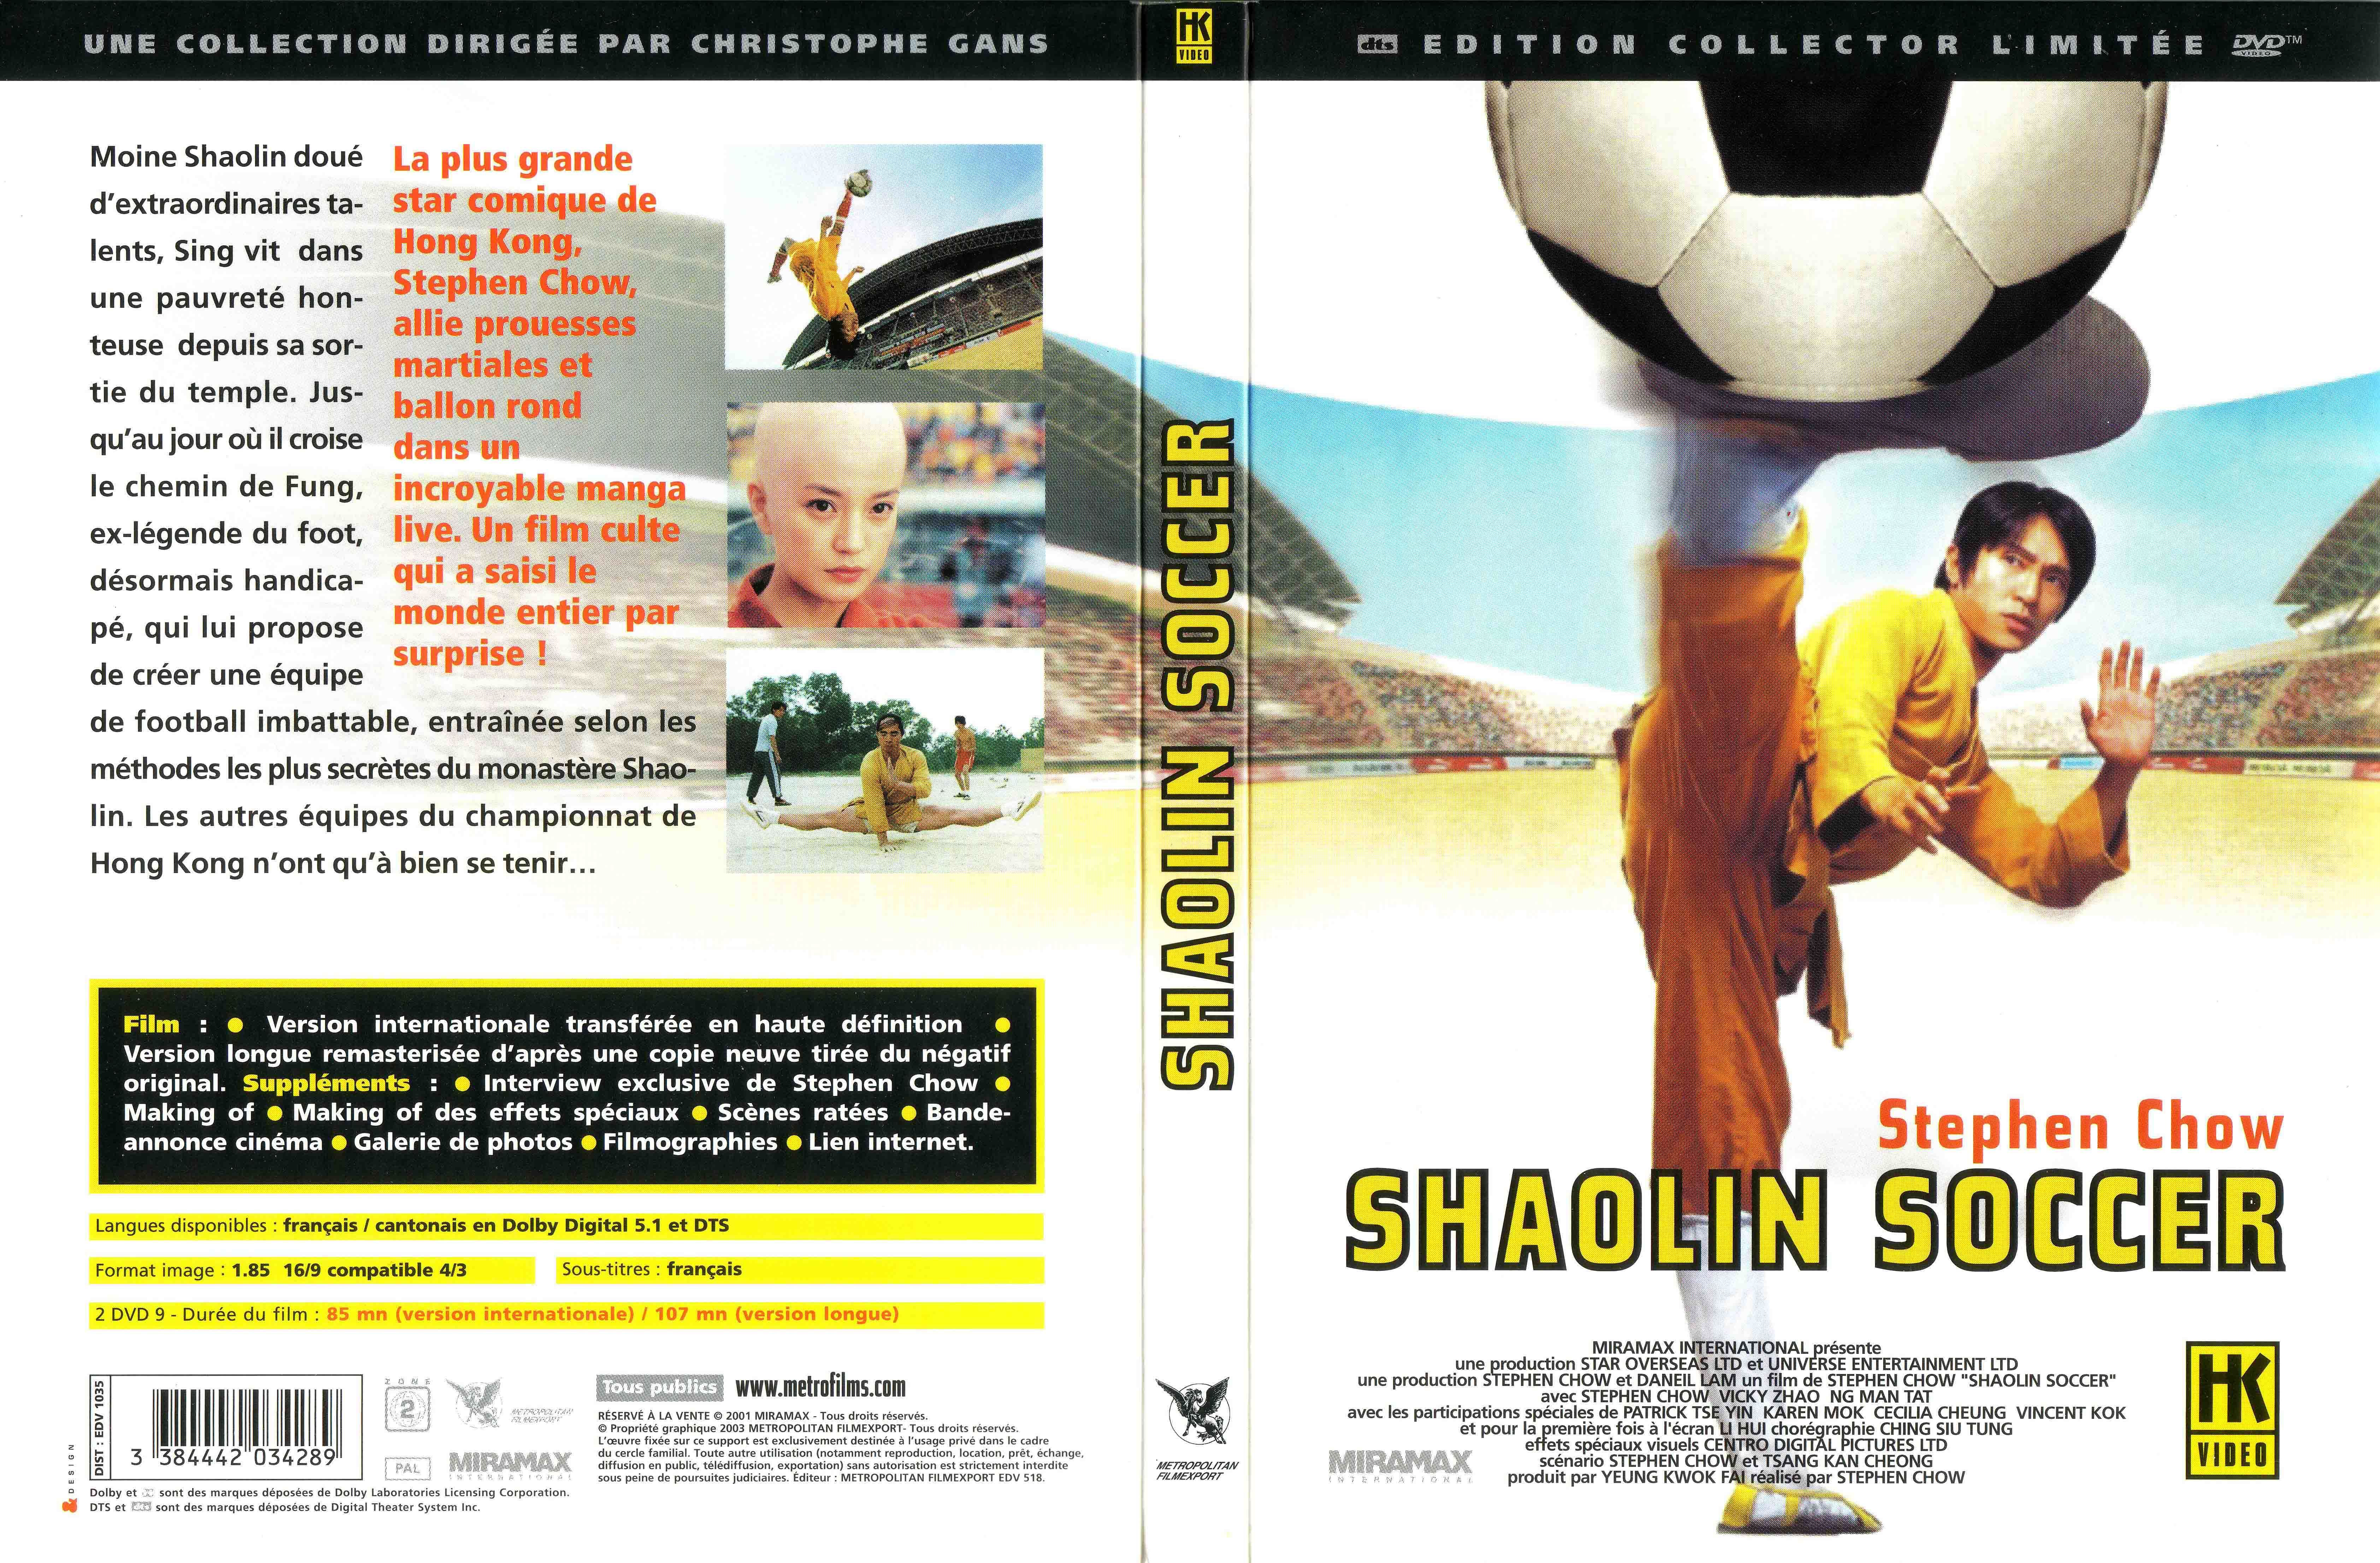 Jaquette DVD Shaolin soccer